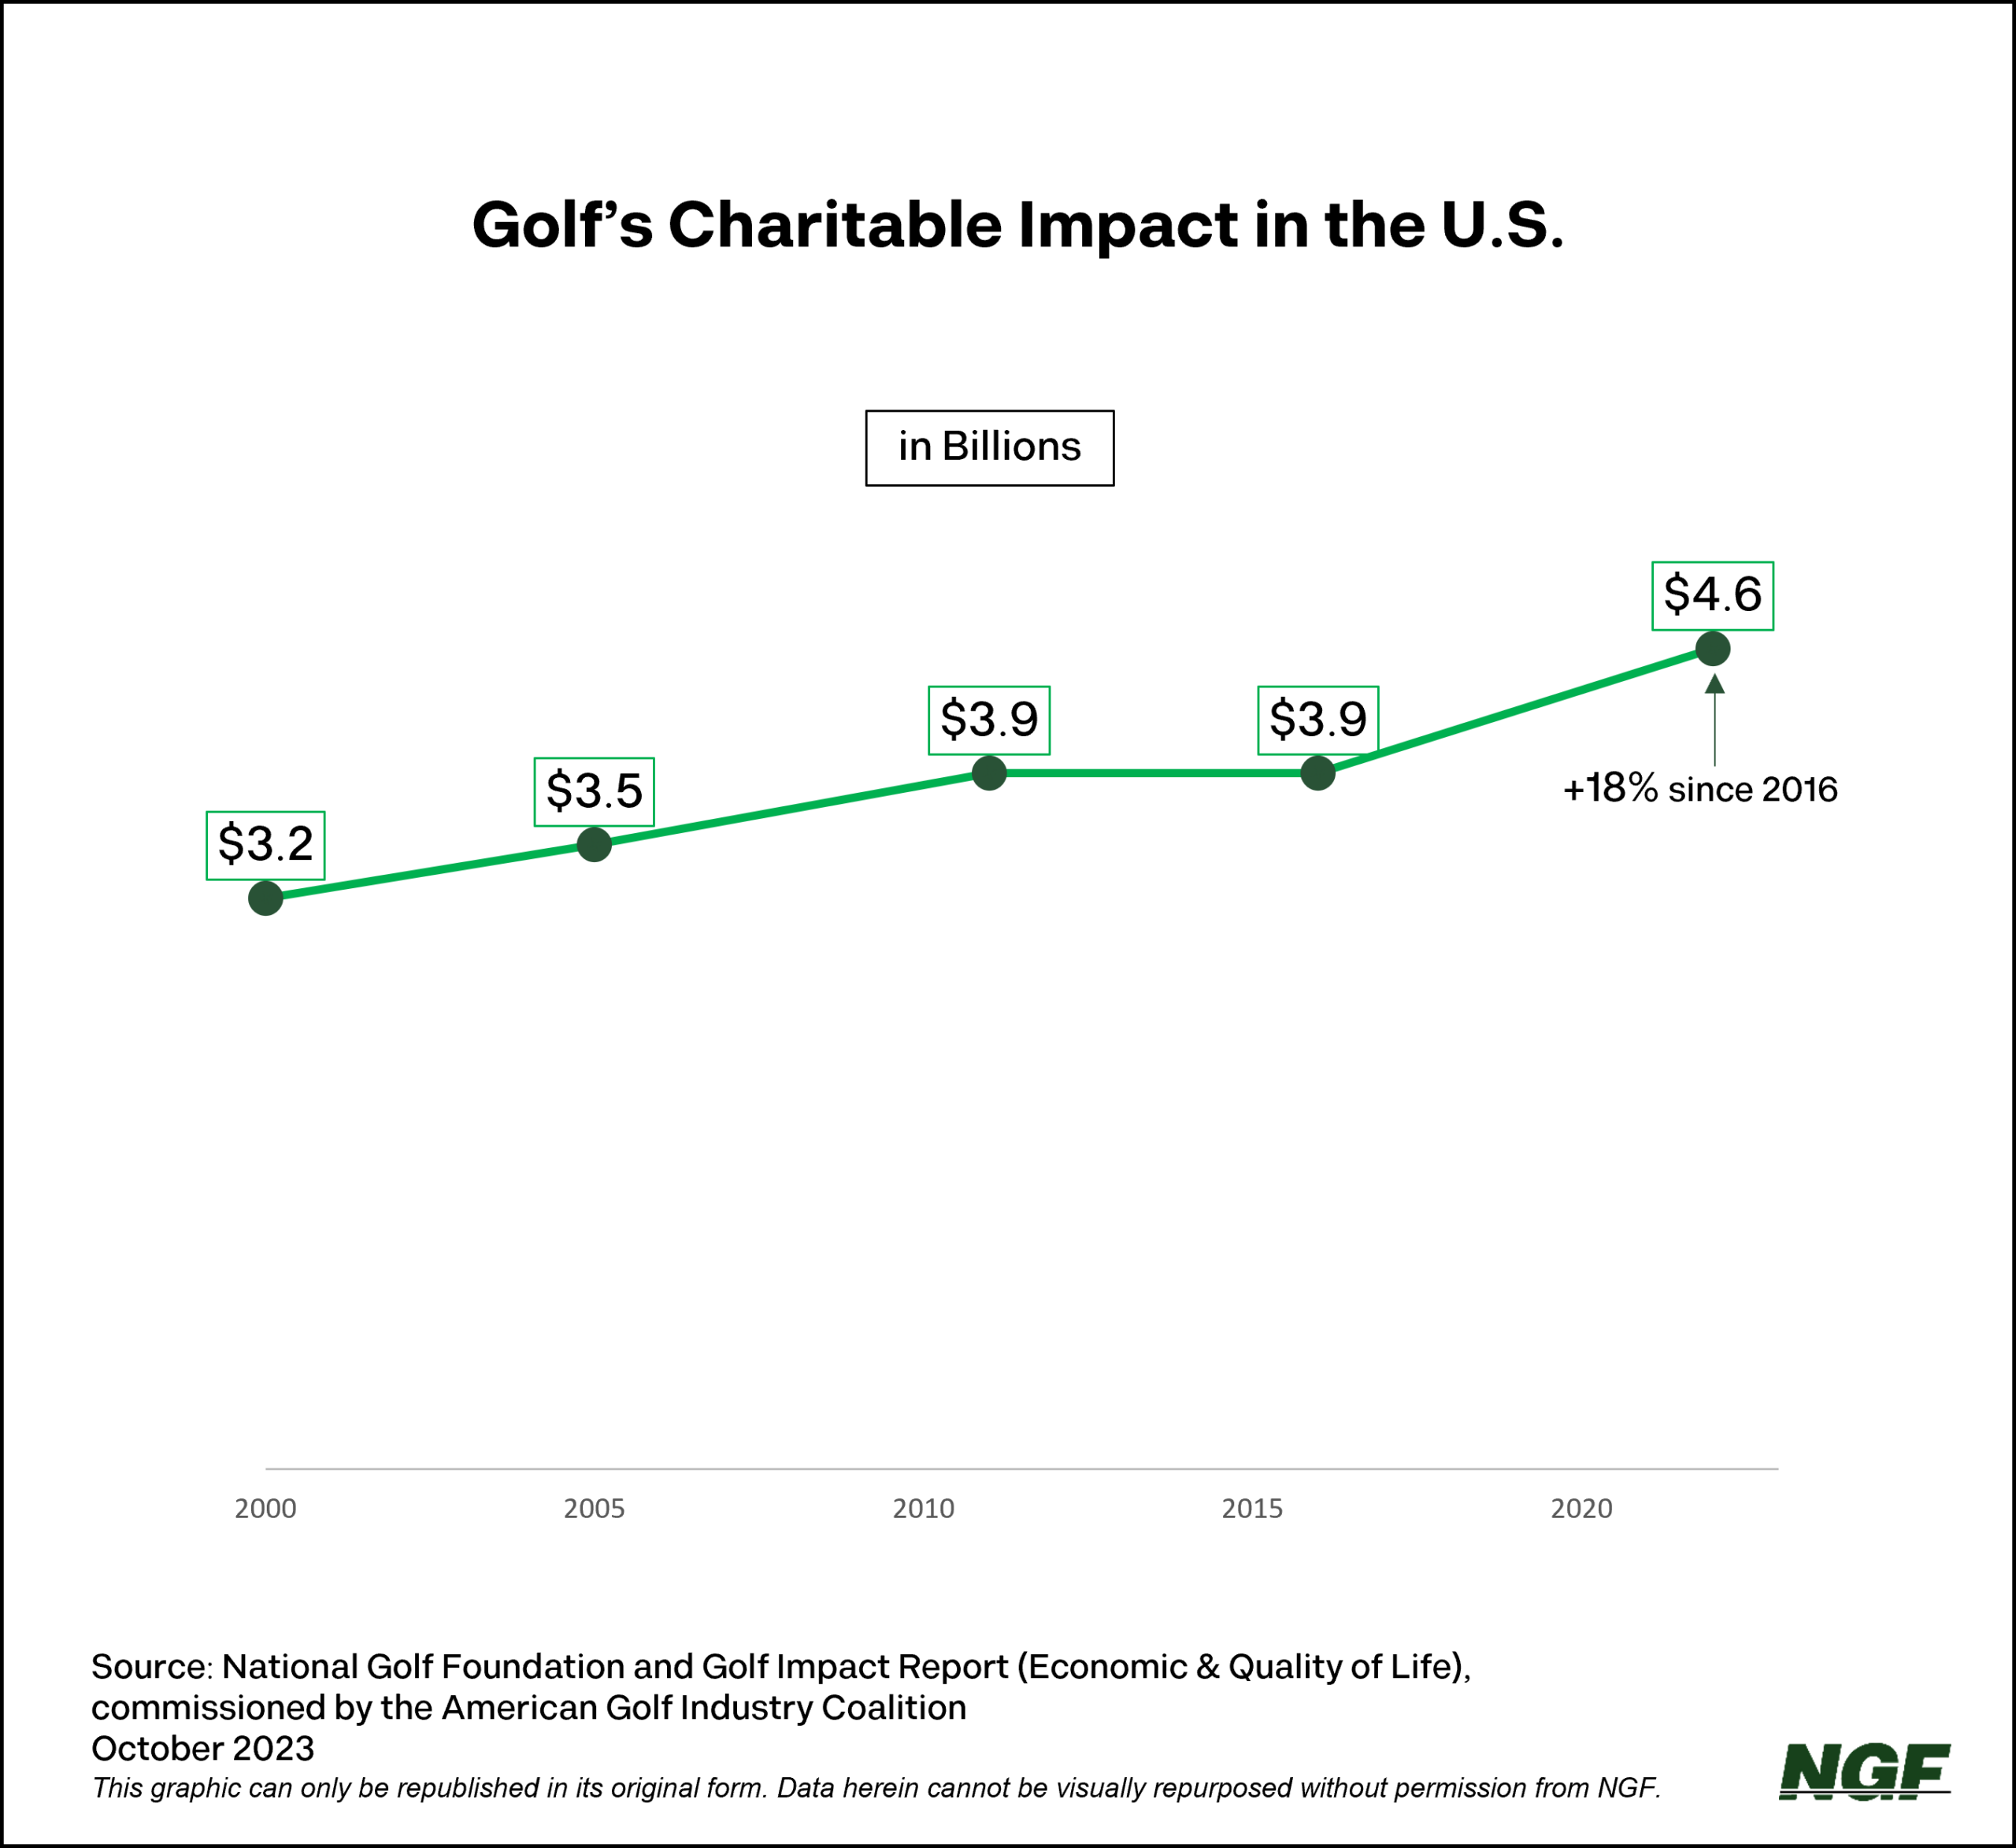 Golf’s Unrivaled Charitable Impact